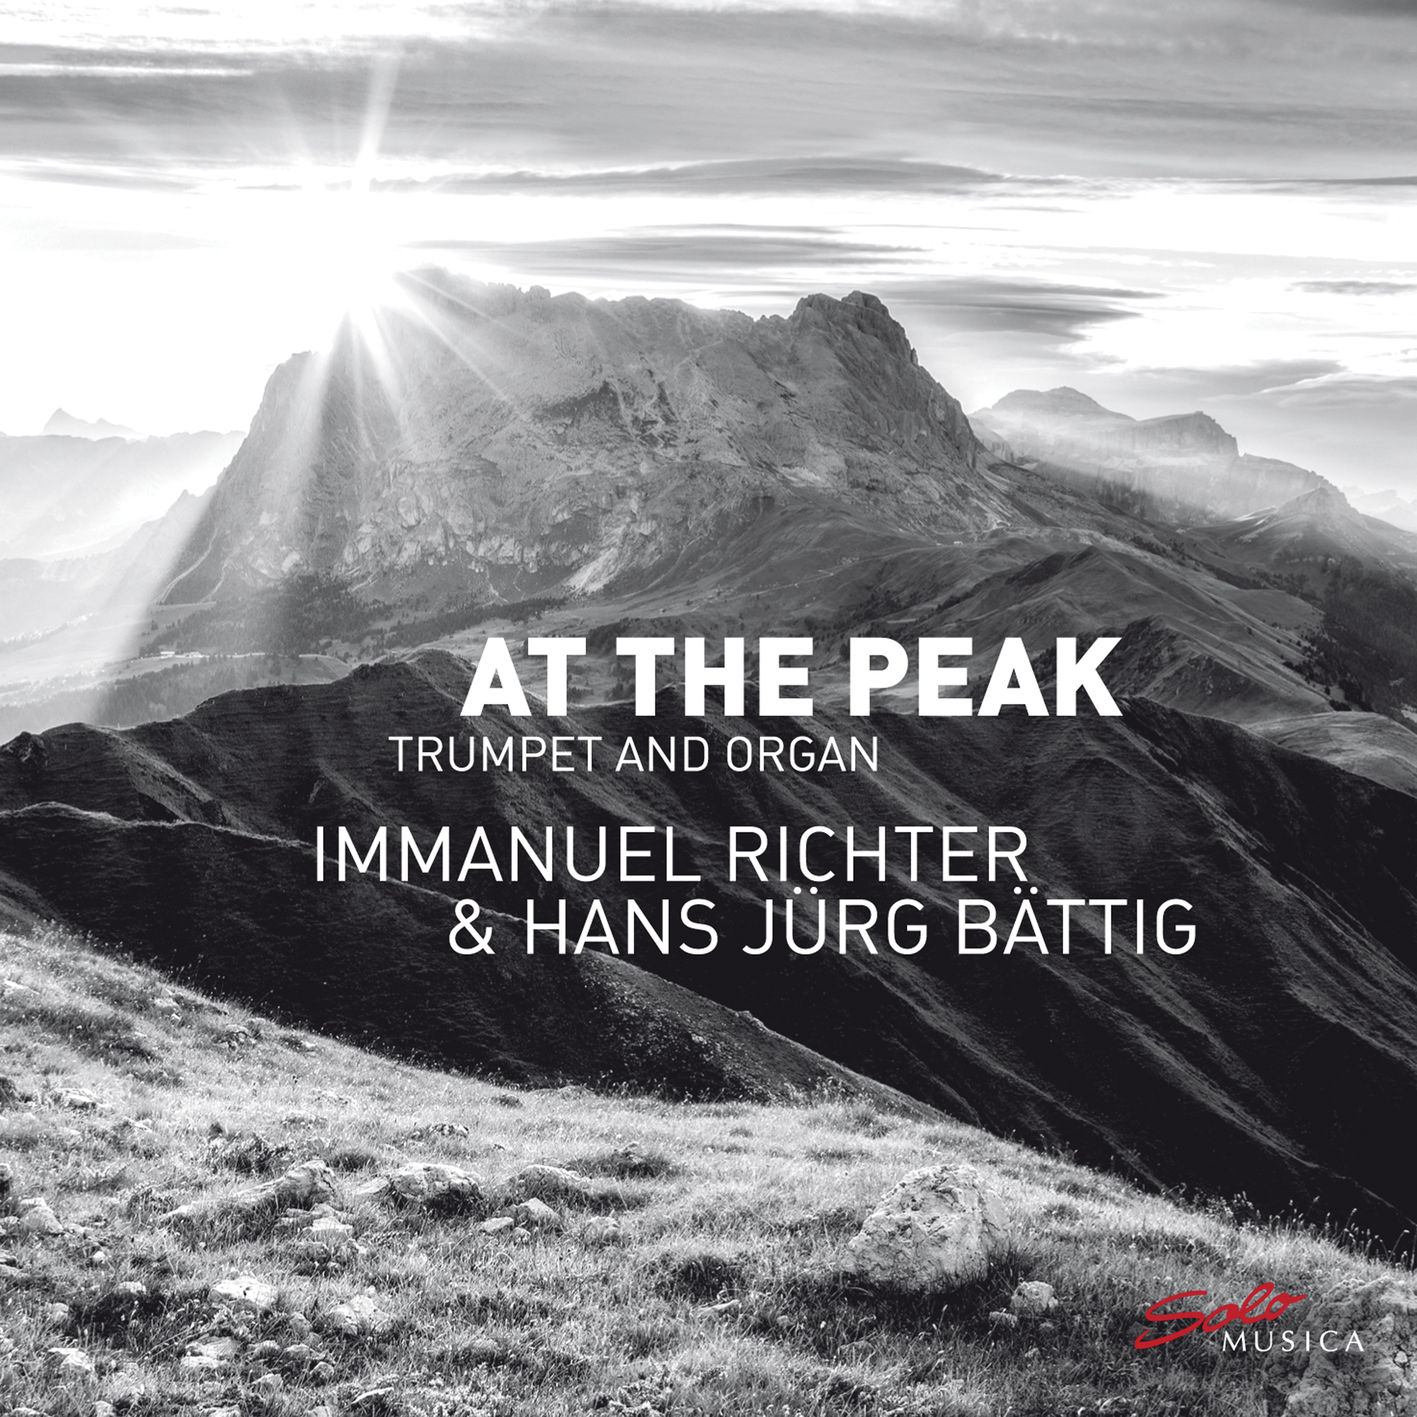 Immanuel Richter & Hans Jurg Battig - At the Peak (2019) [FLAC 24bit/96kHz]